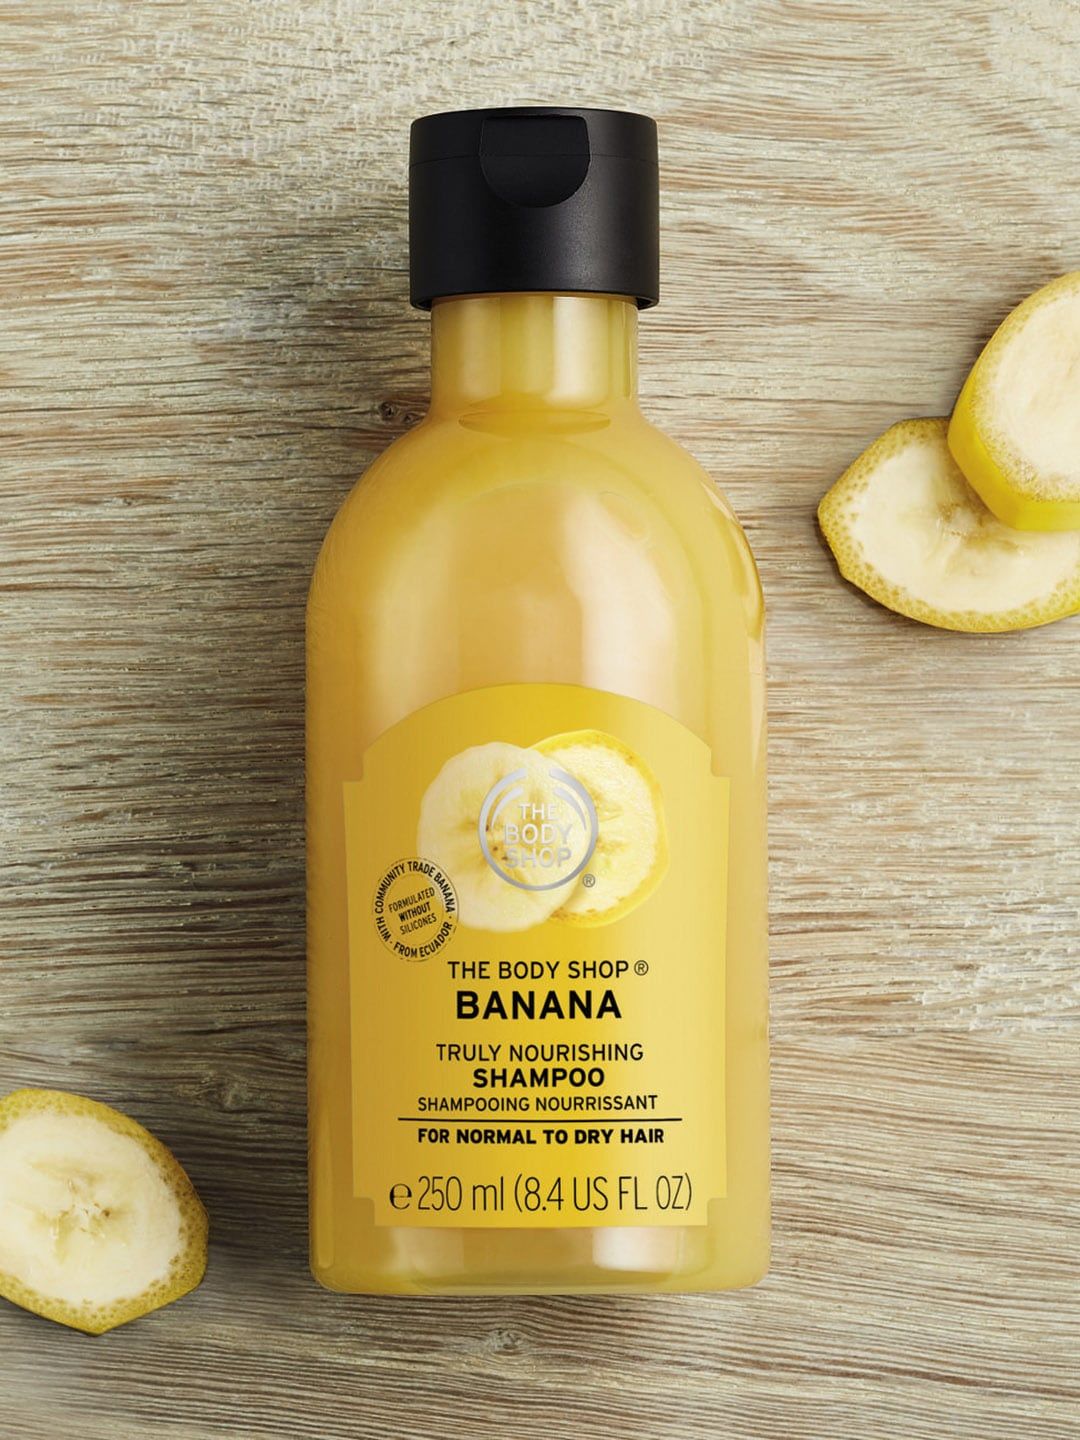 THE BODY SHOP Banana Sustainable Shampoo 250 ml Price in India